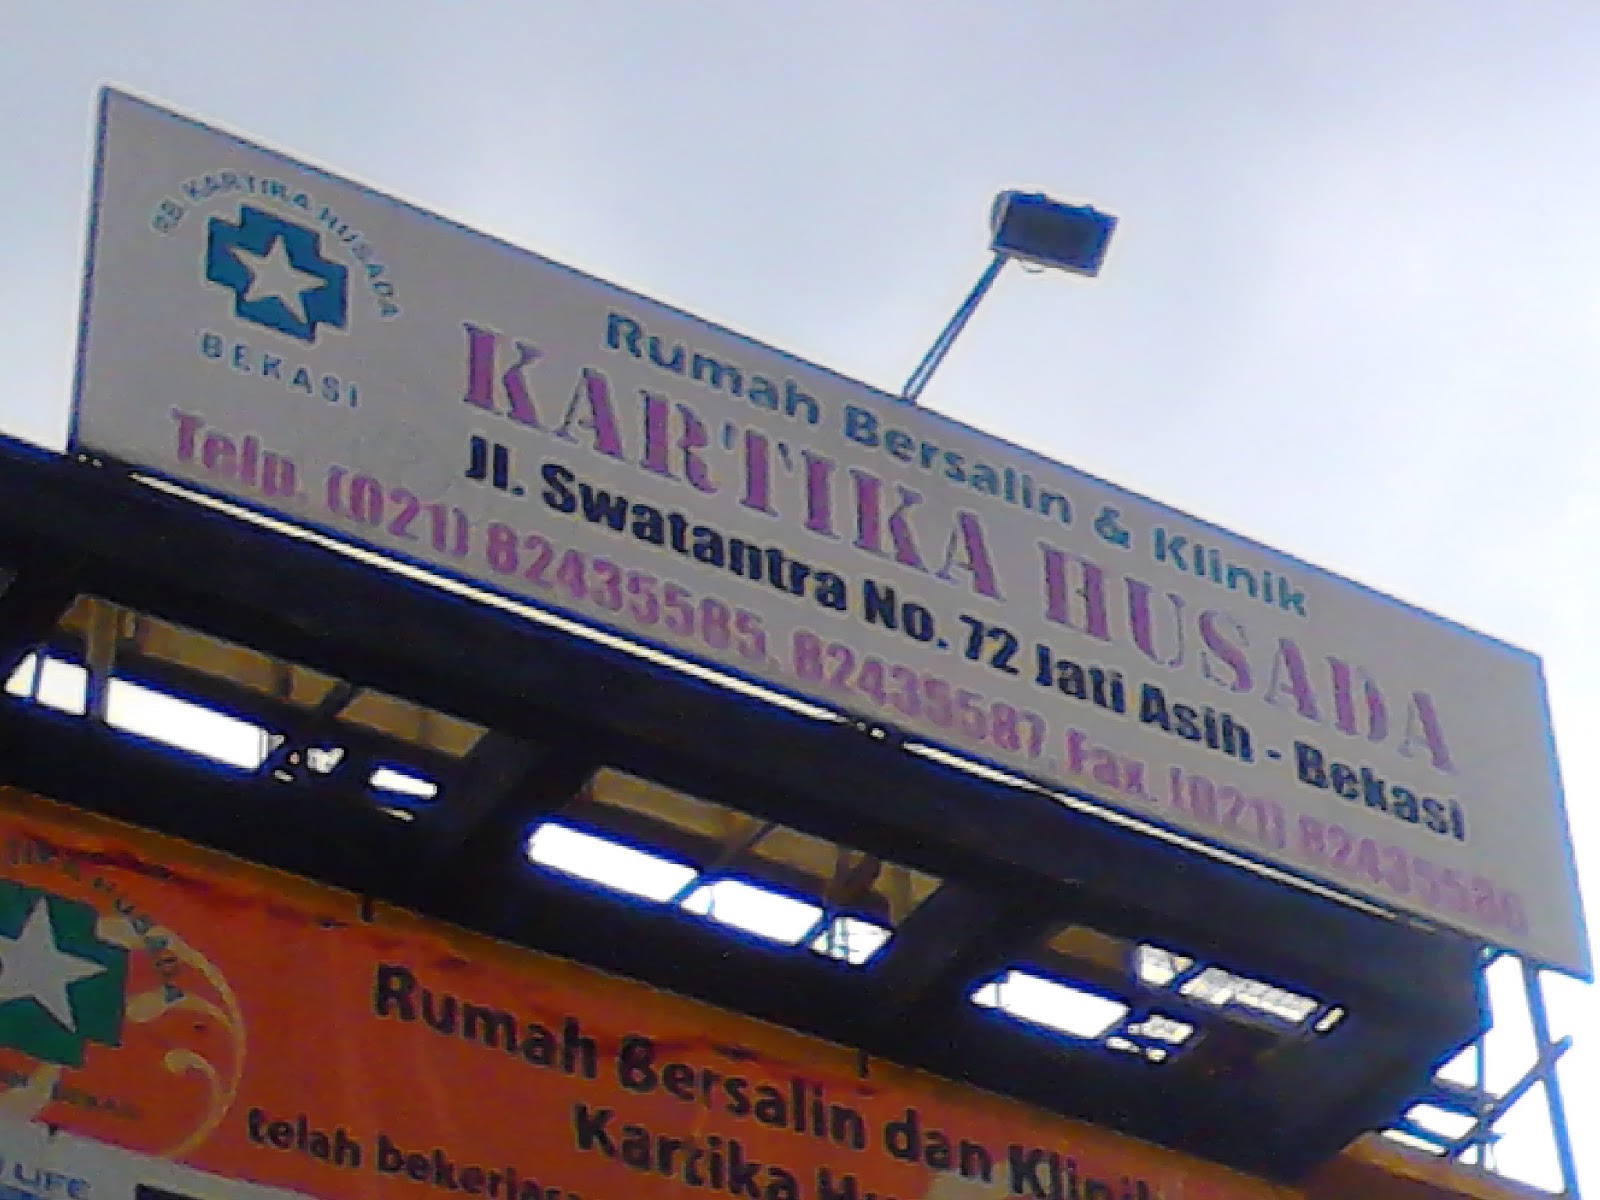 Klinik Kartika Husada JatiAsih Bekasi Jln Swatantra No 72 phone 021 5587 fax 021